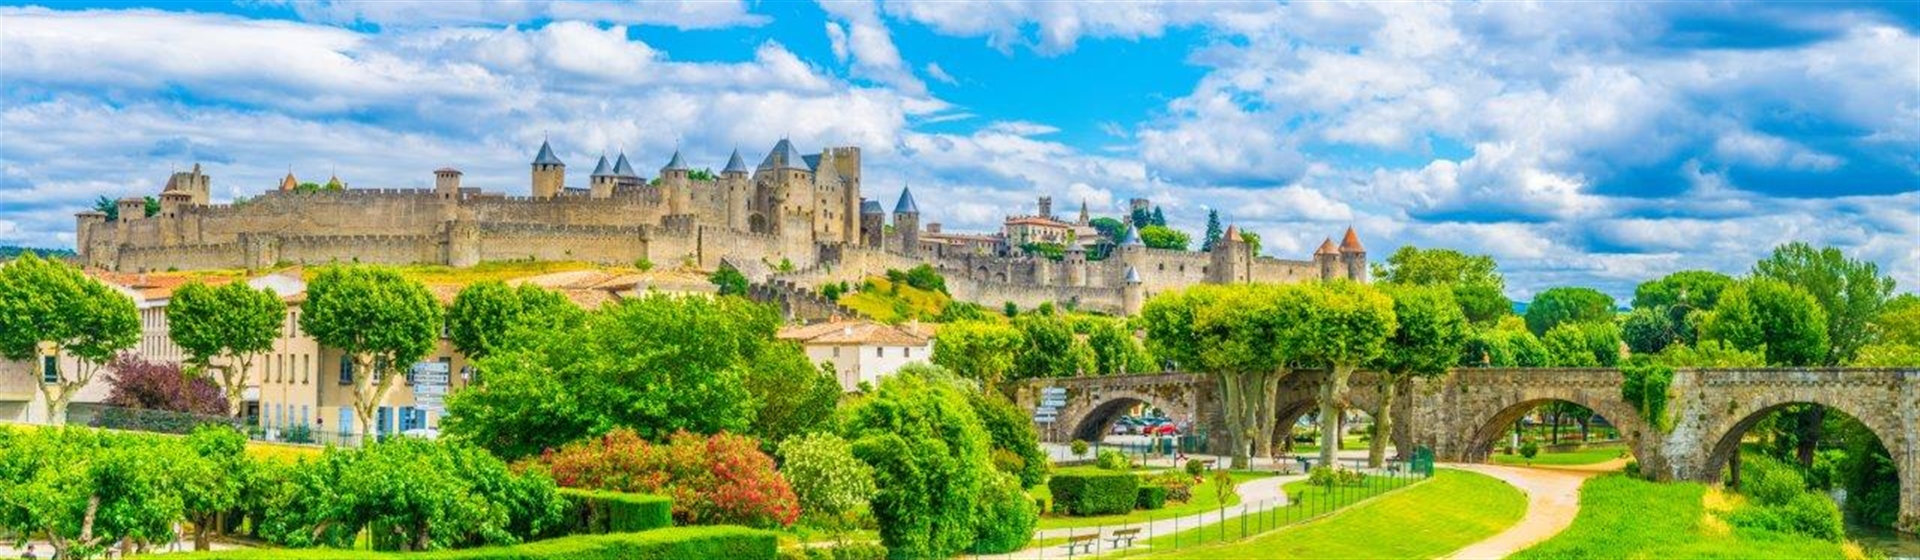 <img src="carcassonne1©shutterstock.jpeg" alt=Carcassonne"/>